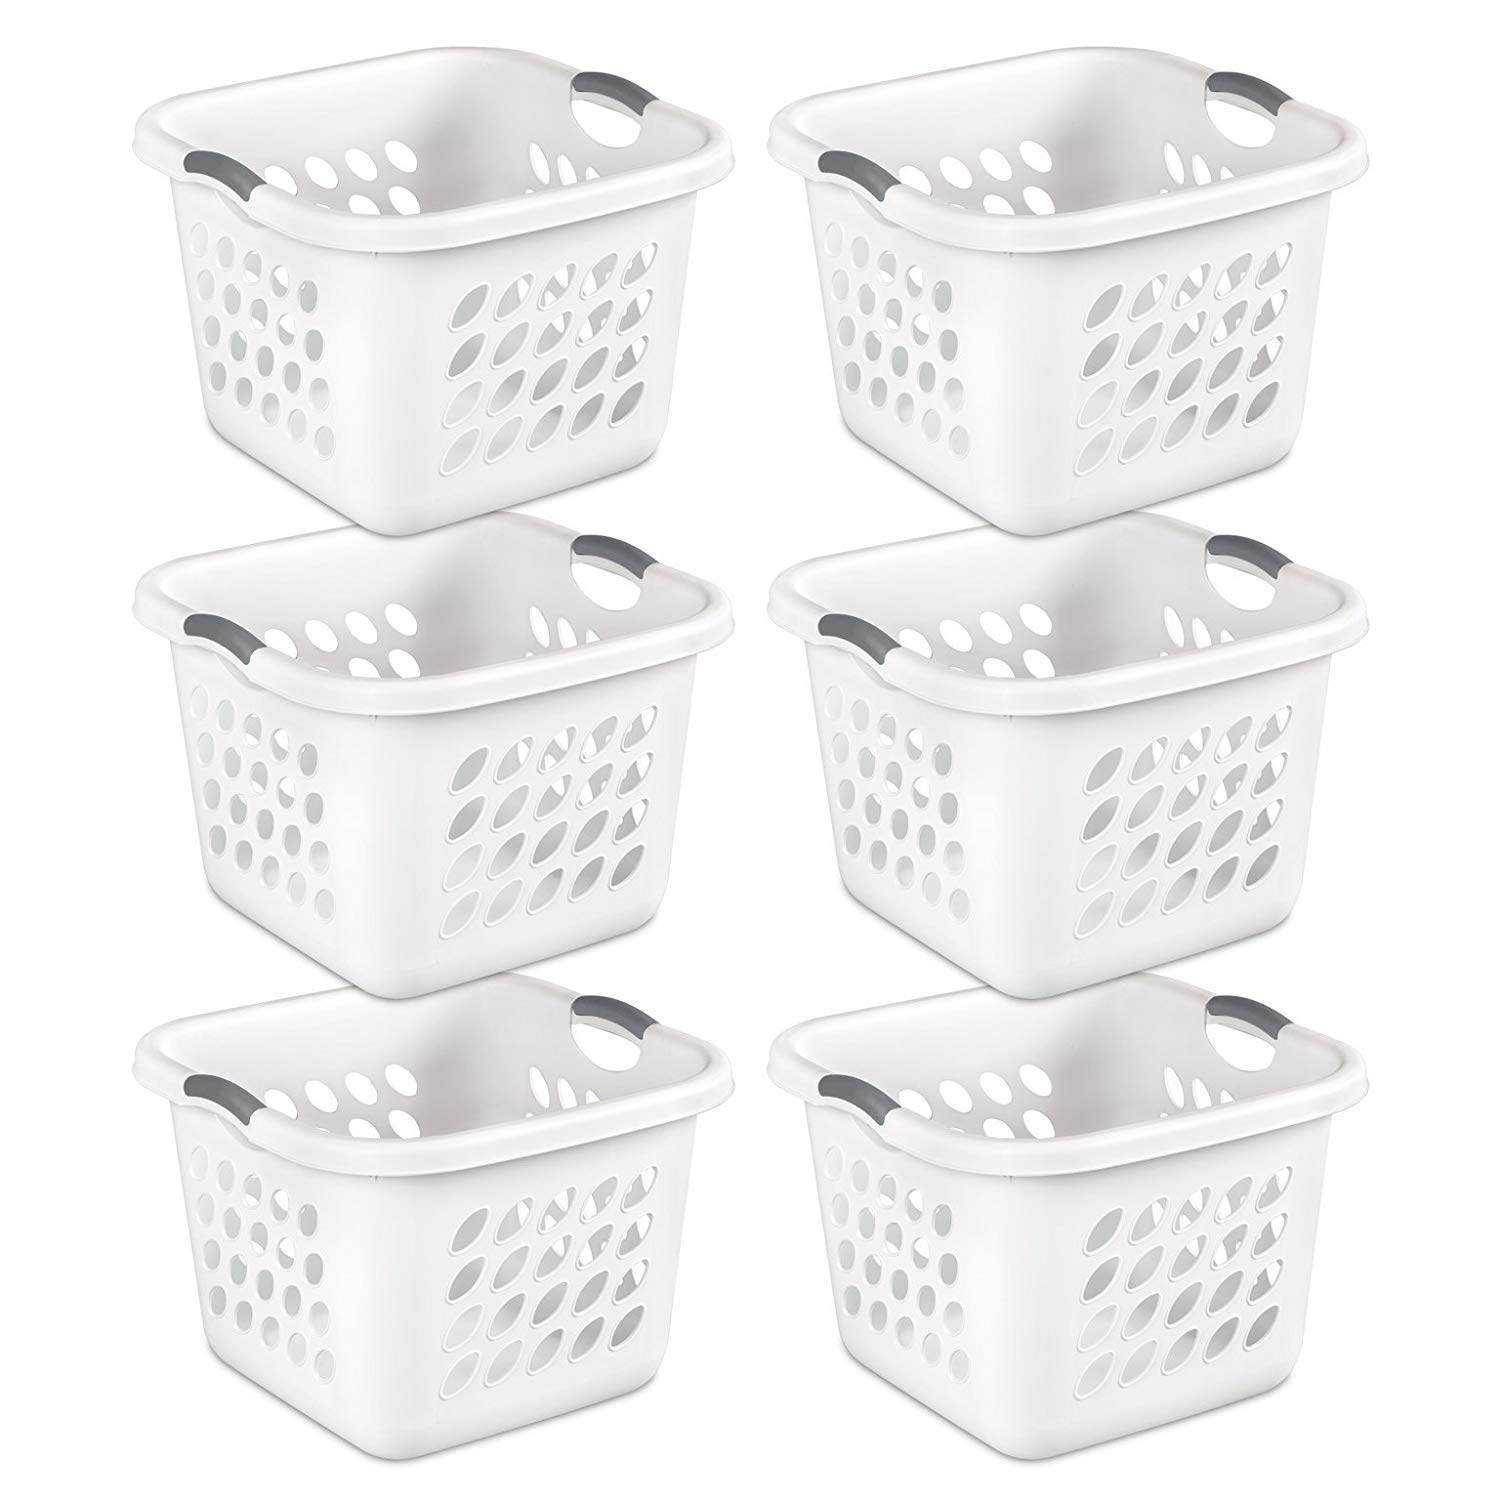 Sterilite Ventilation Holes Laundry Baskets For College, 6-Pack